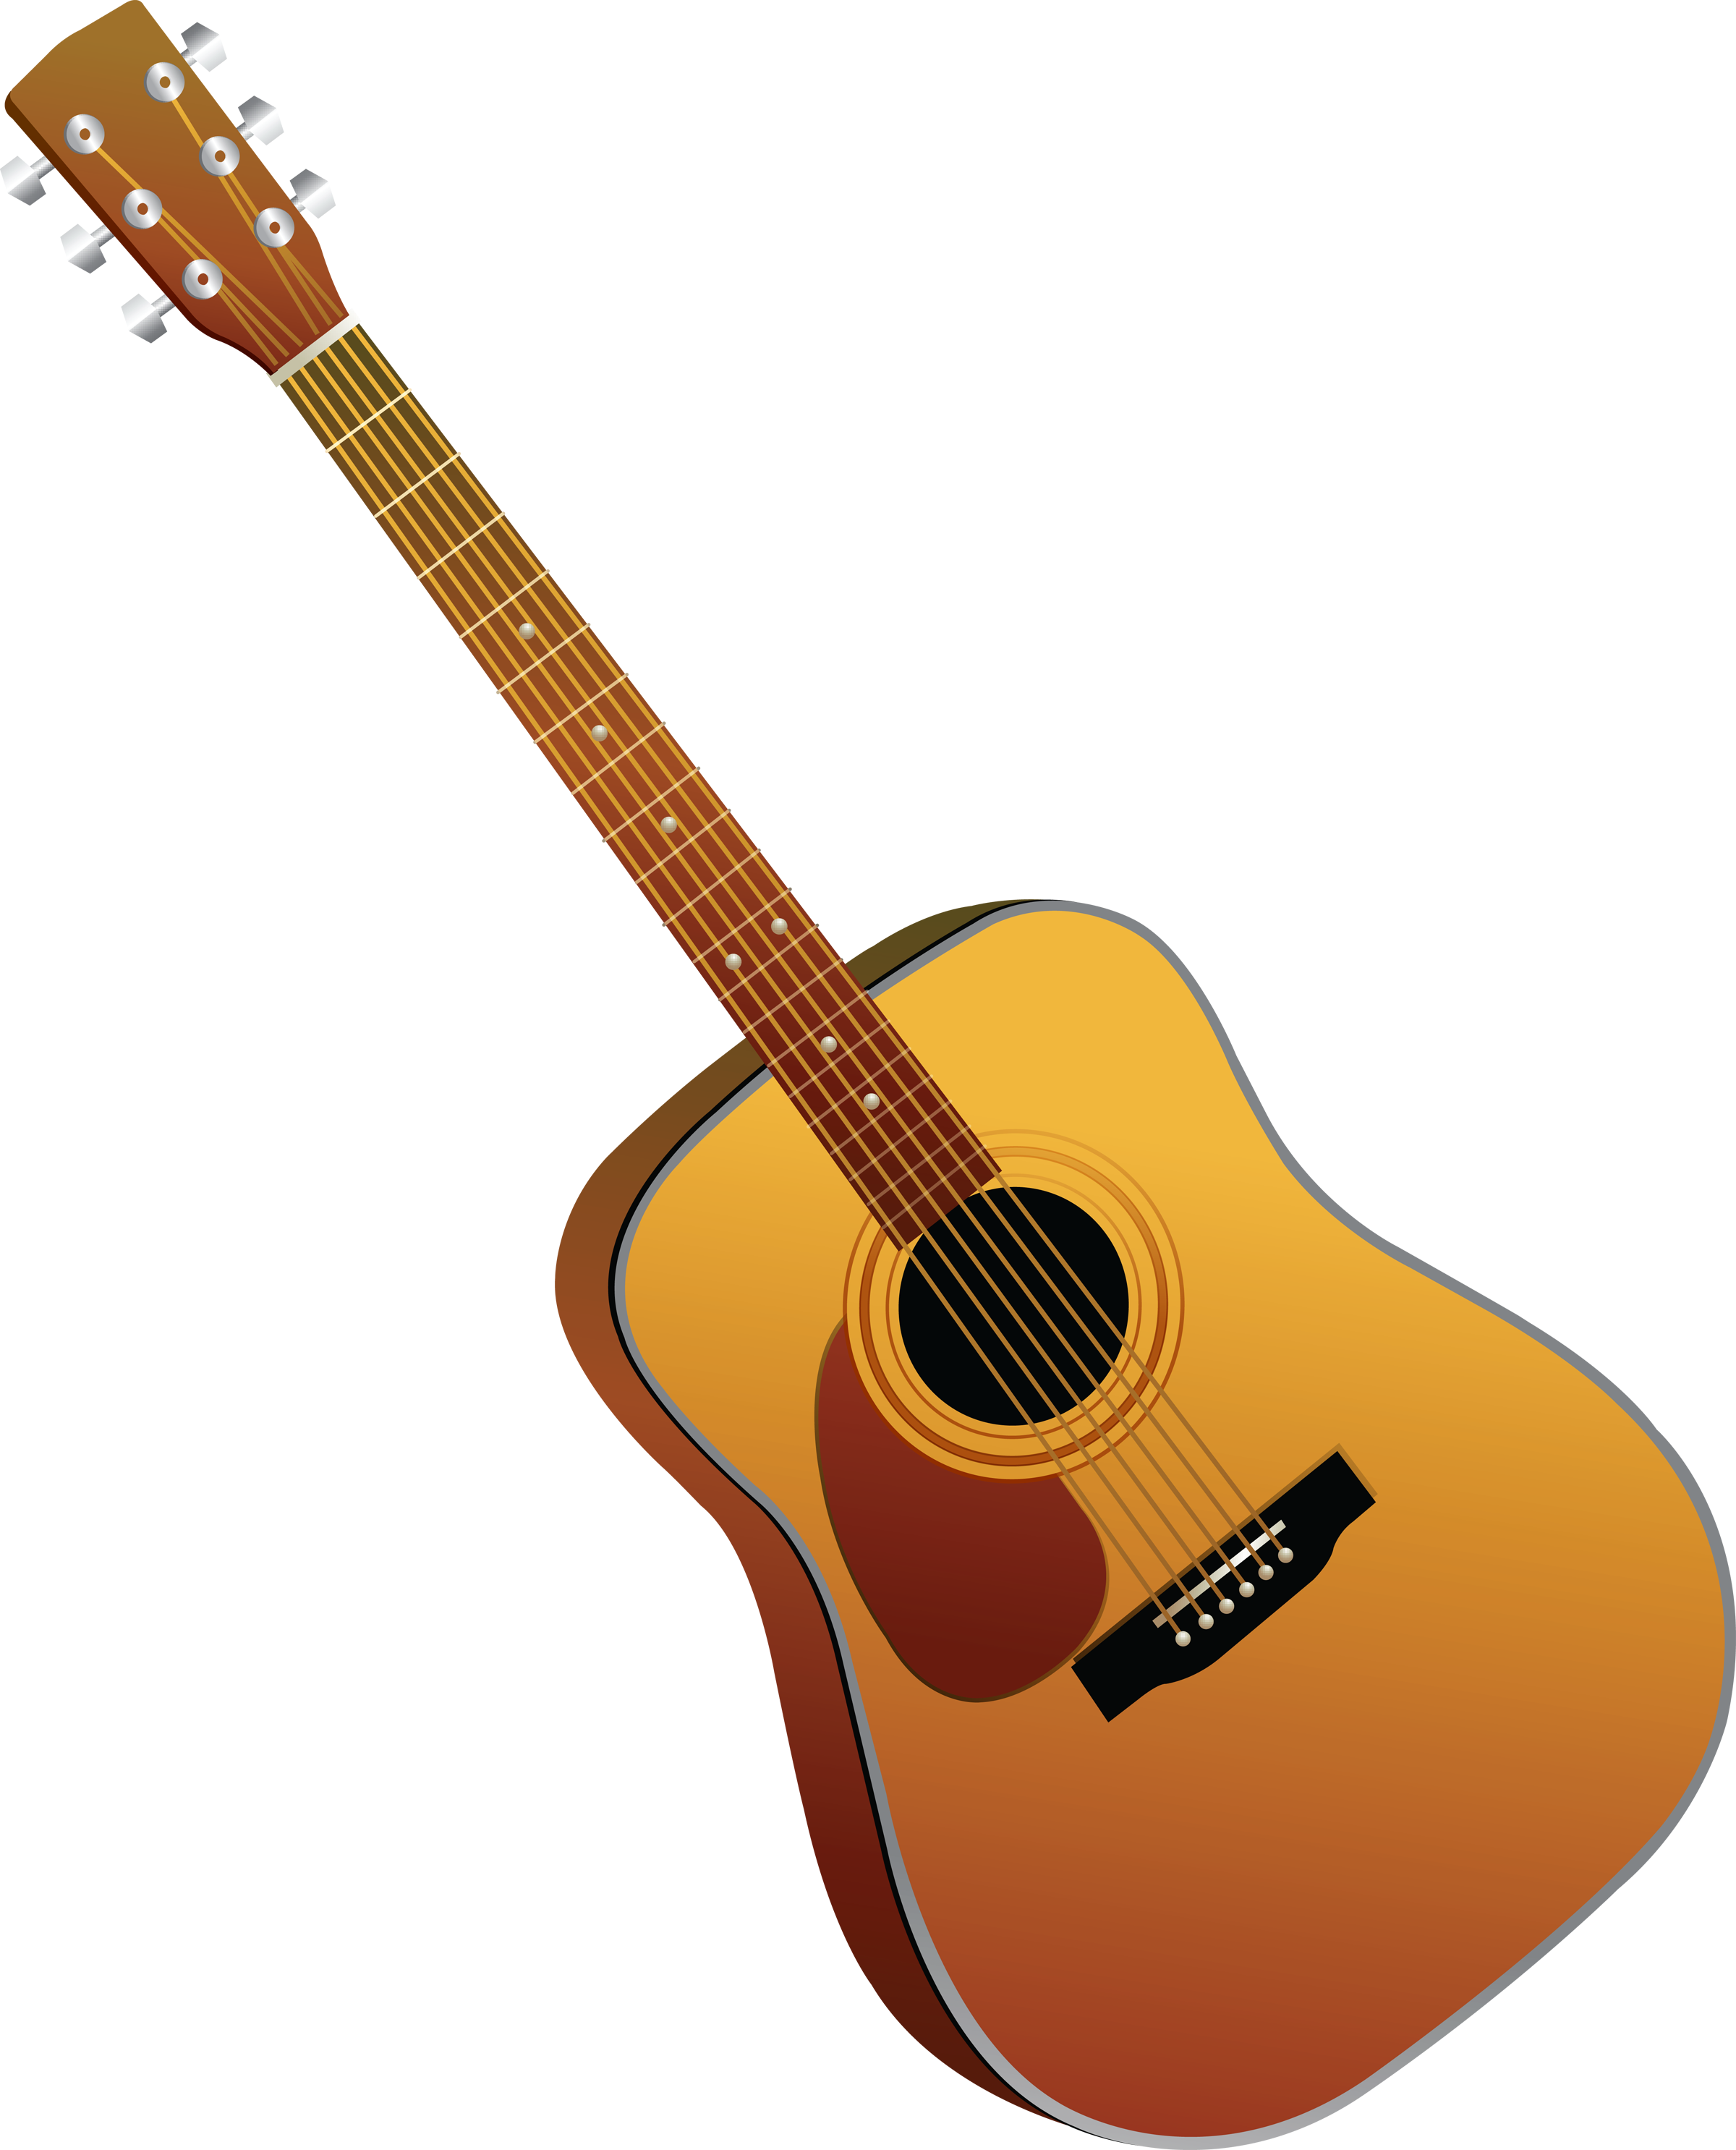 Free Cartoon Guitar Png, Download Free Cartoon Guitar Png png images